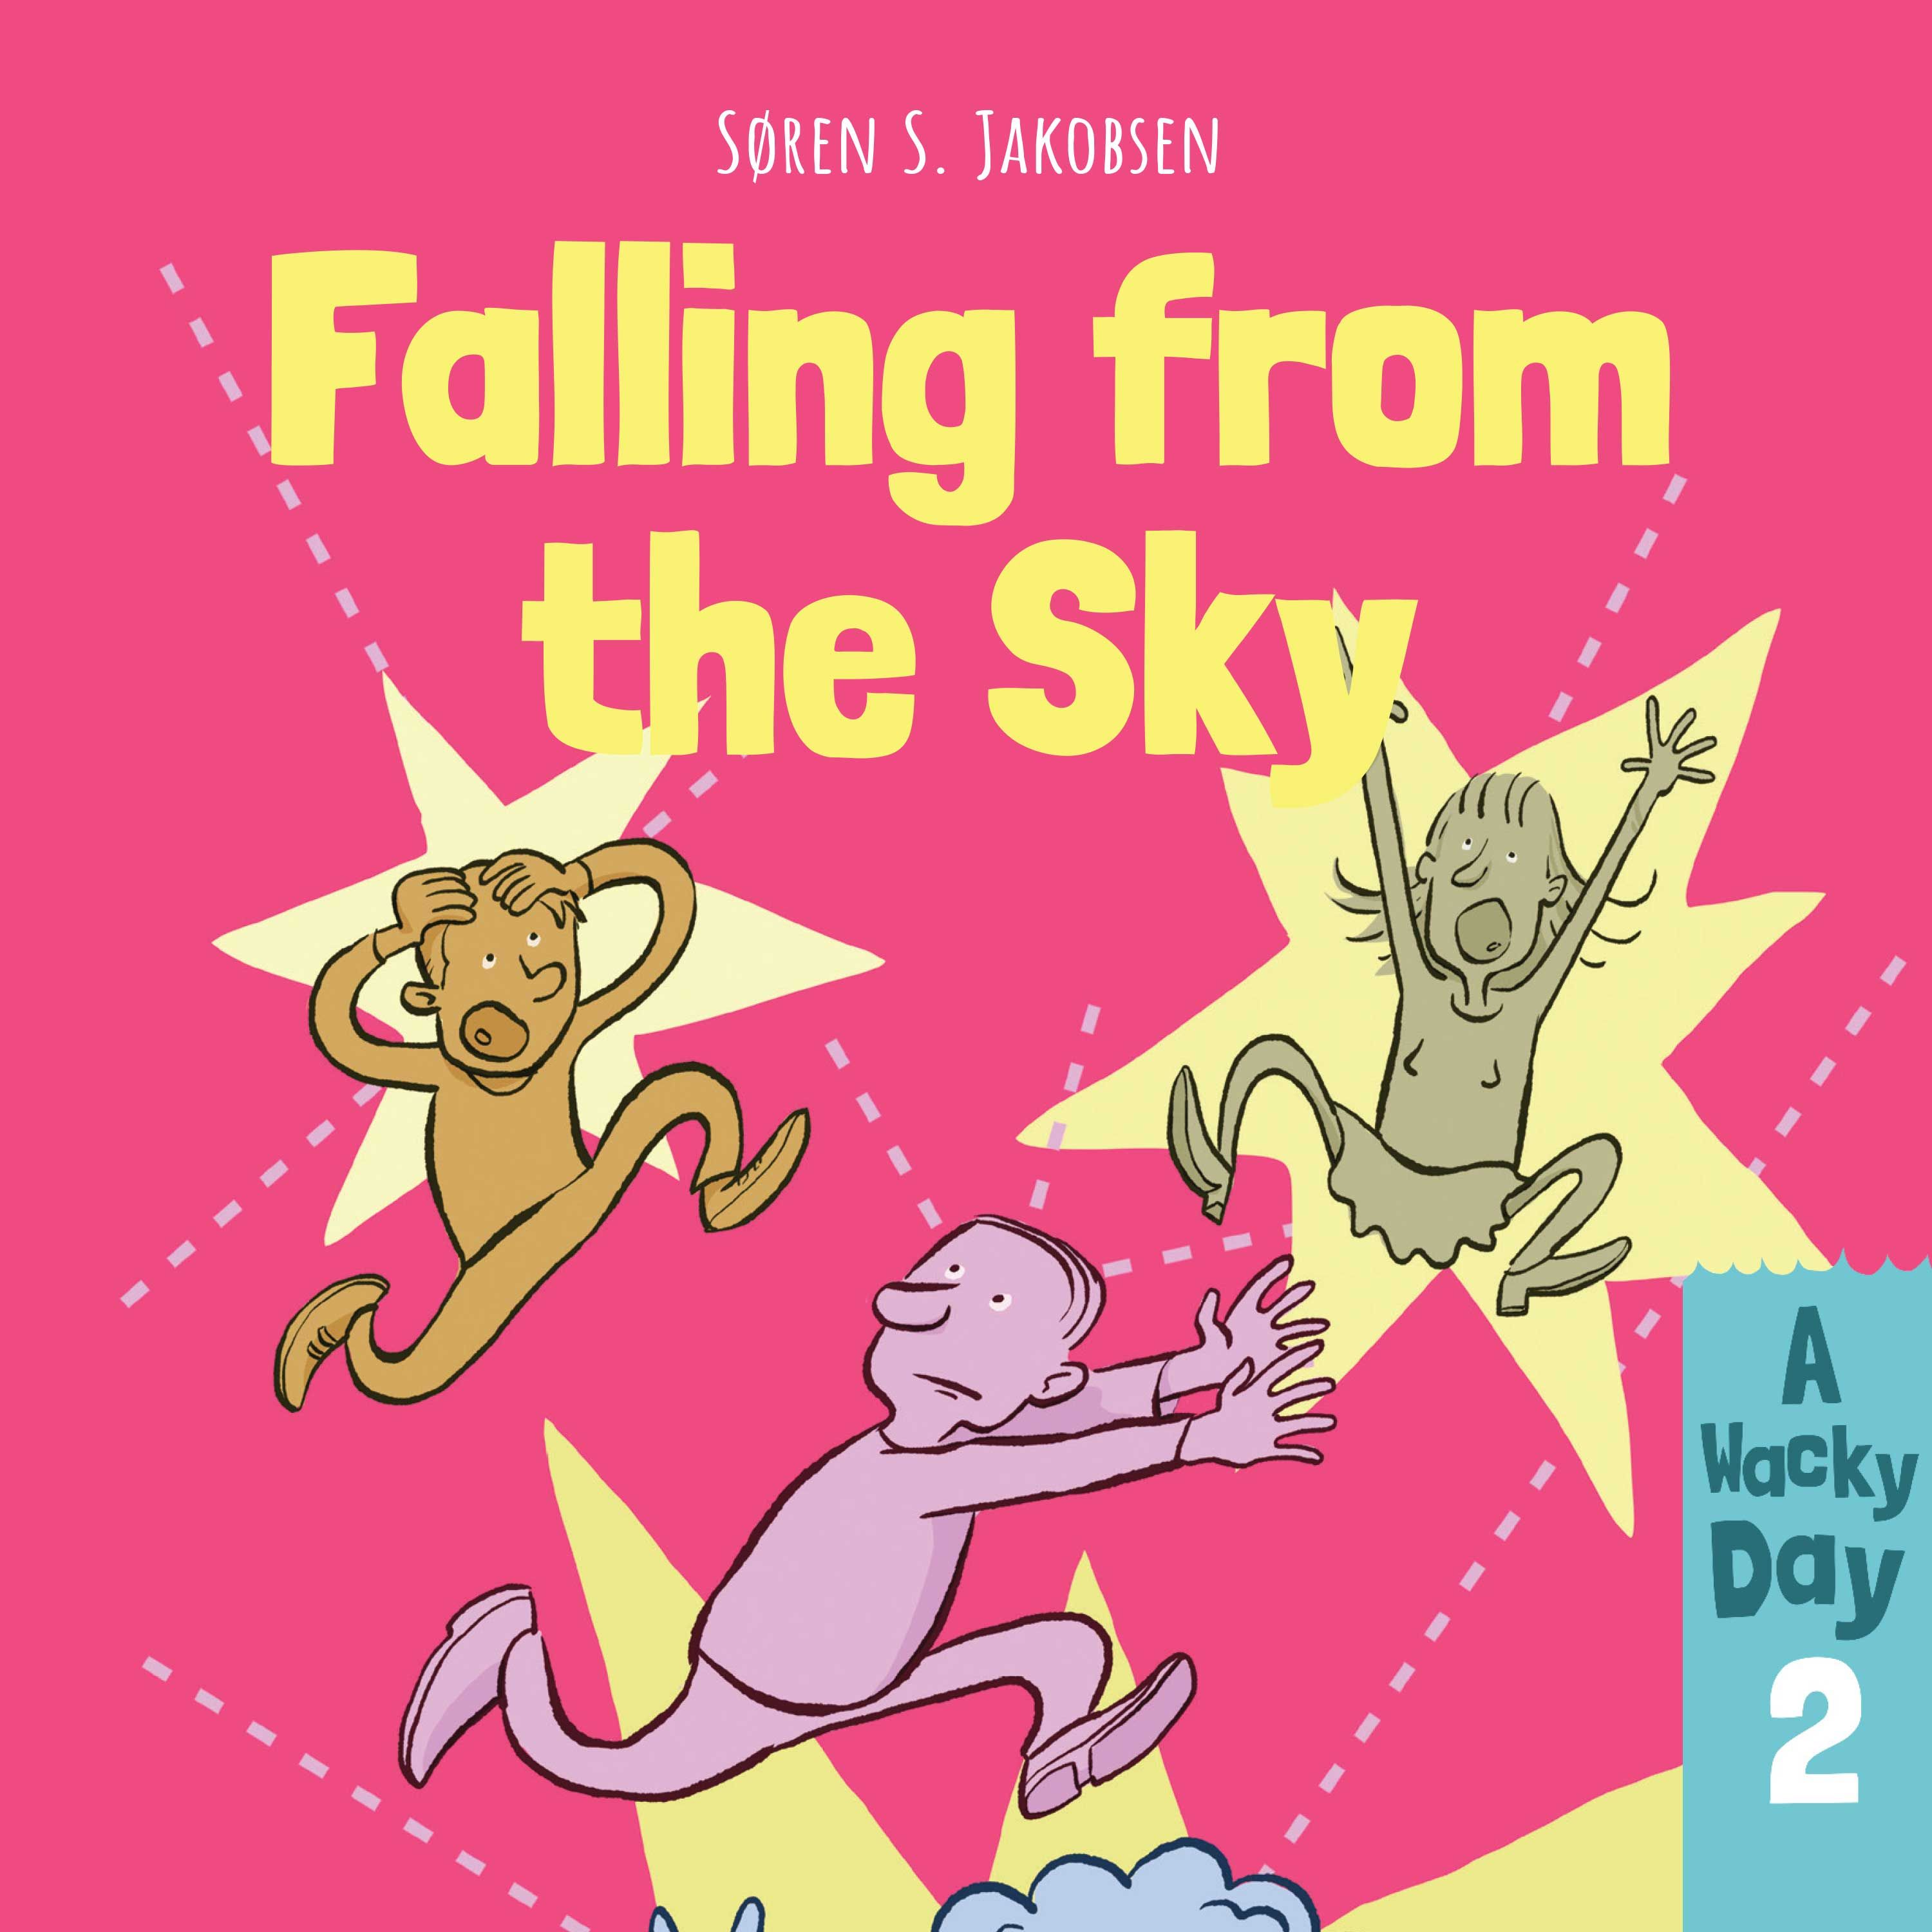 A Wacky Day #2: Falling from the Sky, audiobook by Søren S. Jakobsen